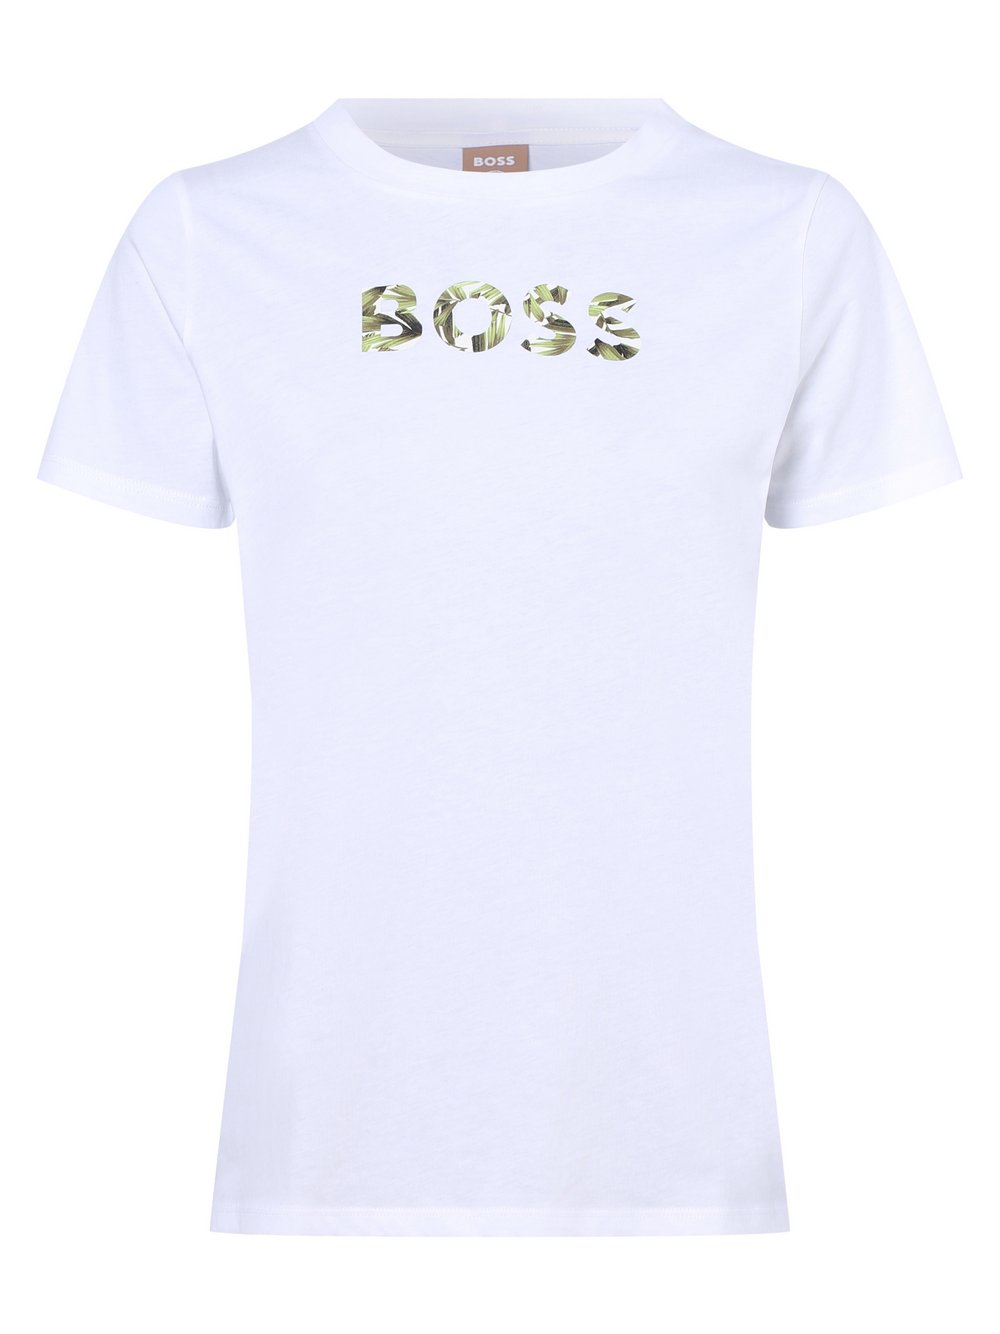 BOSS - T-shirt damski – C_Elogo_6, biały